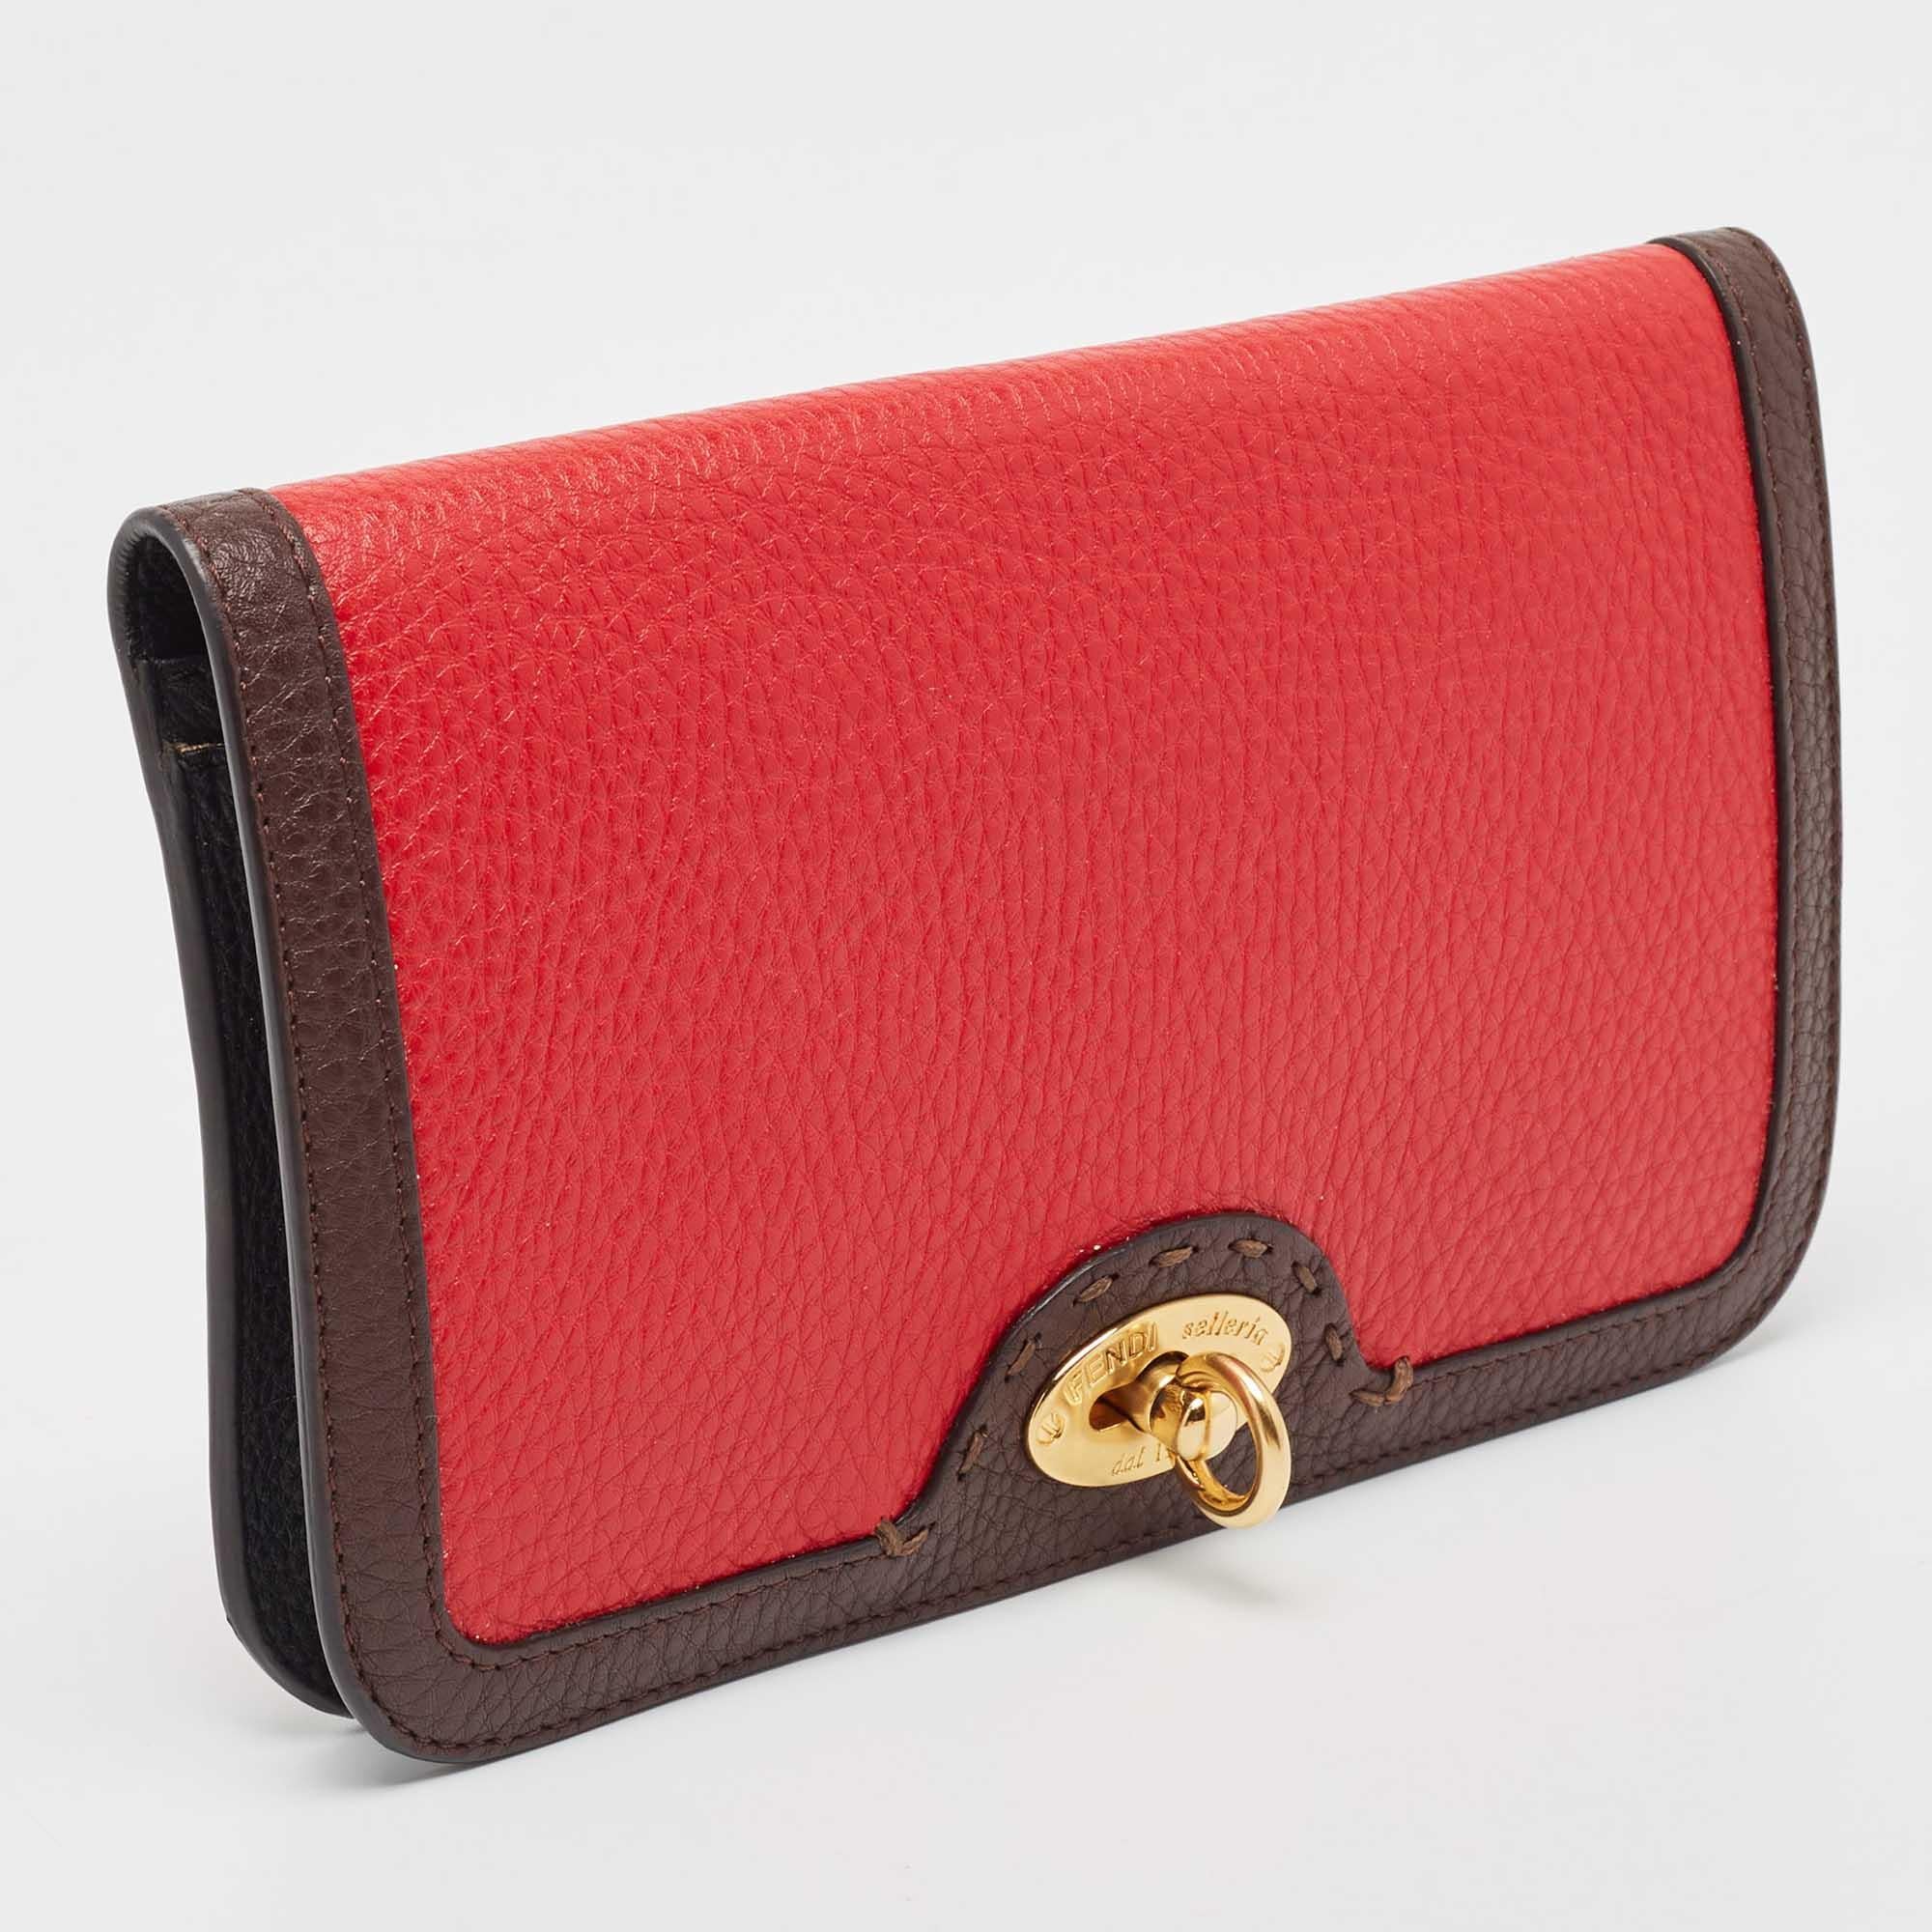 Fendi Dark Brown/Red Selleria Leather Flap Clutch In Excellent Condition For Sale In Dubai, Al Qouz 2